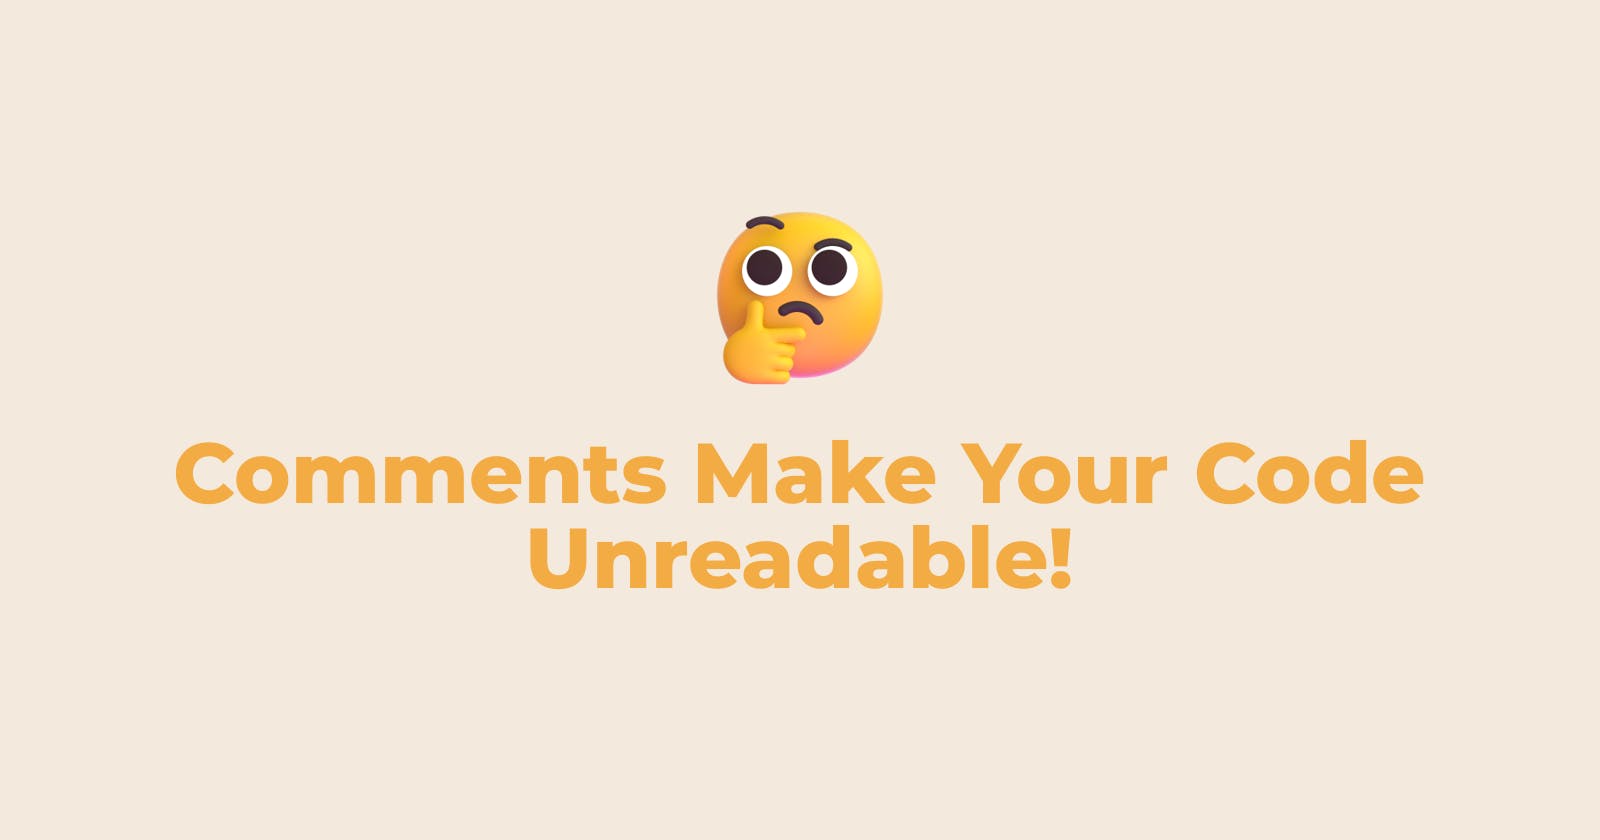 Comments Make Your Code Unreadable!